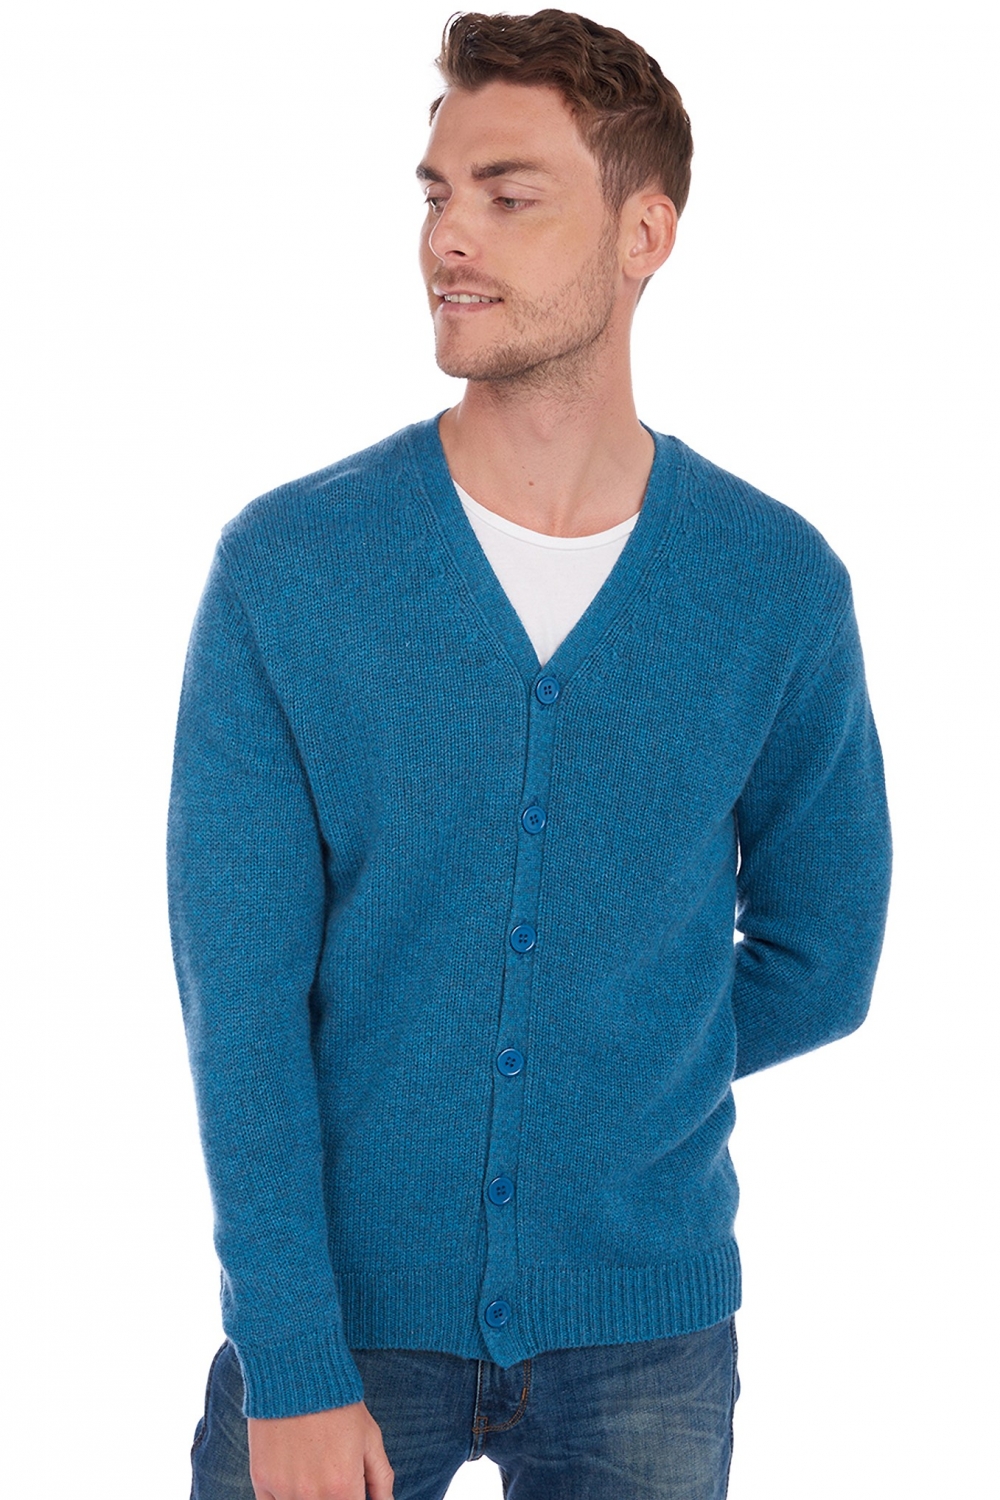 Cashmere men waistcoat sleeveless sweaters aden manor blue 4xl